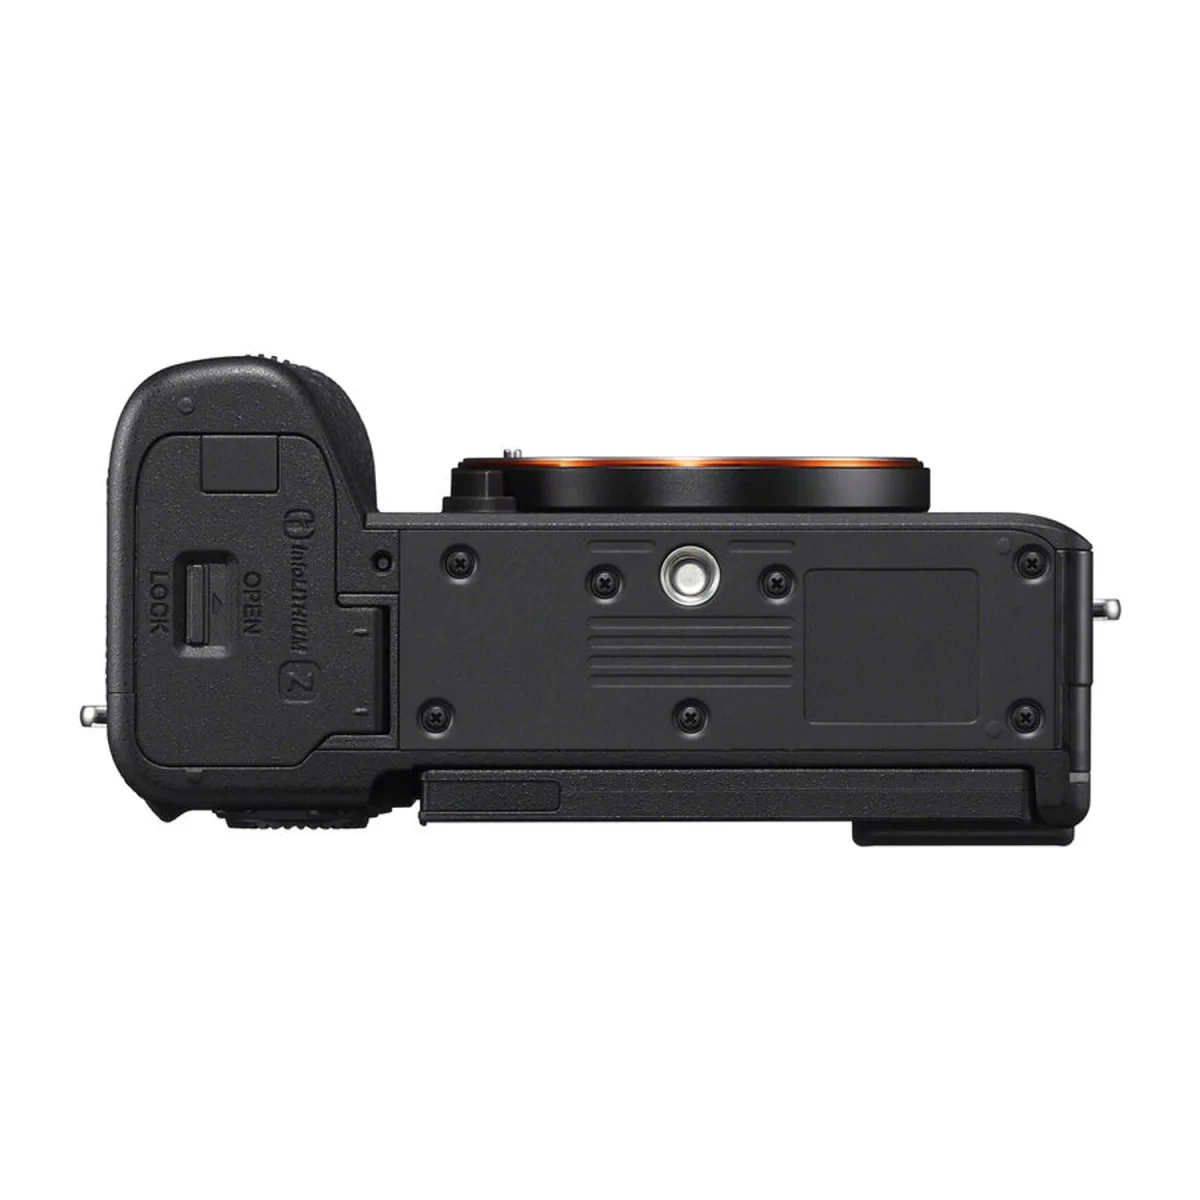 Sony Alpha a7C II mirrorless camera with black body 7 1